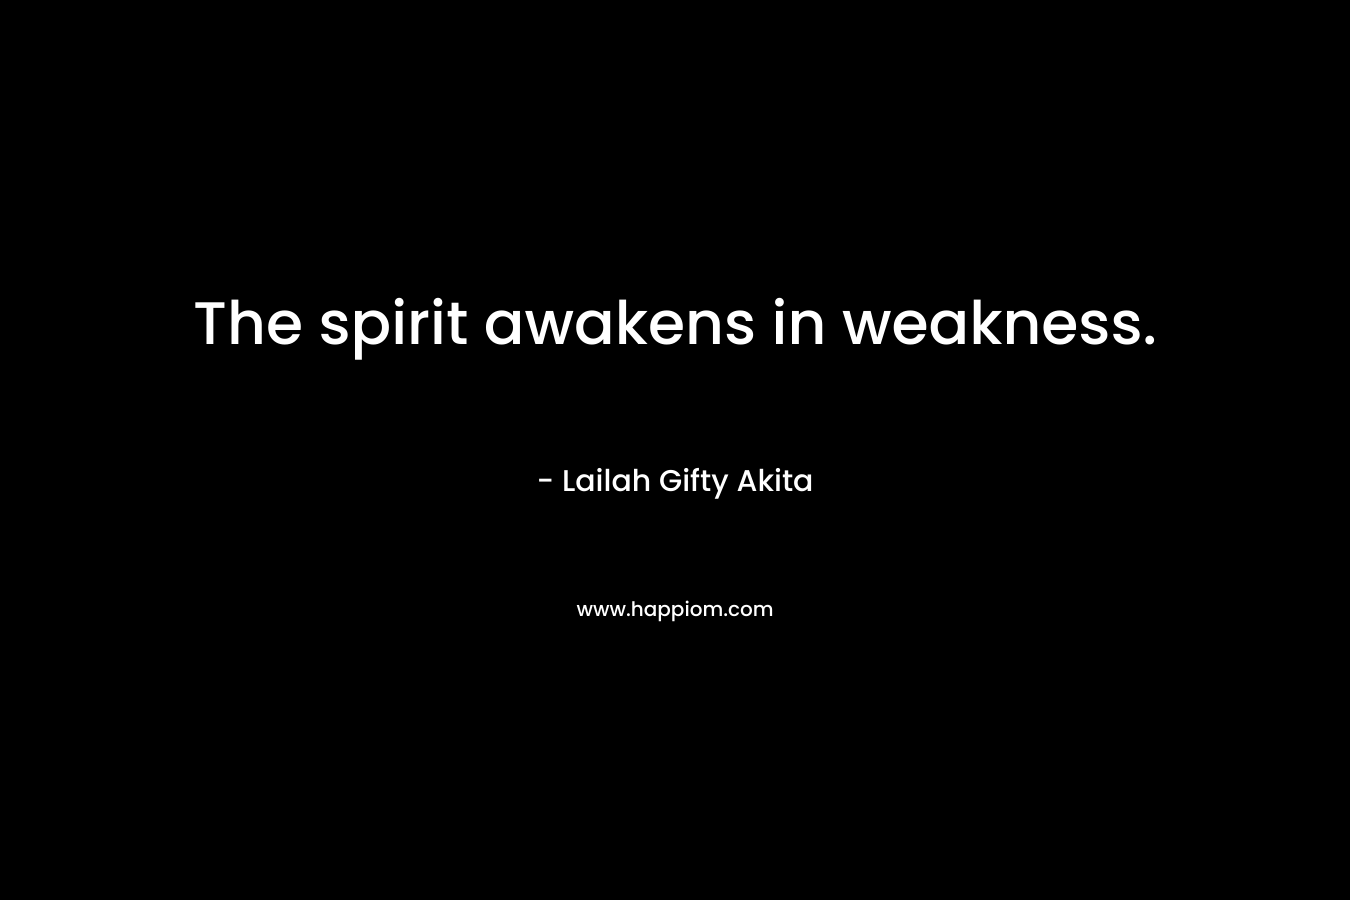 The spirit awakens in weakness.